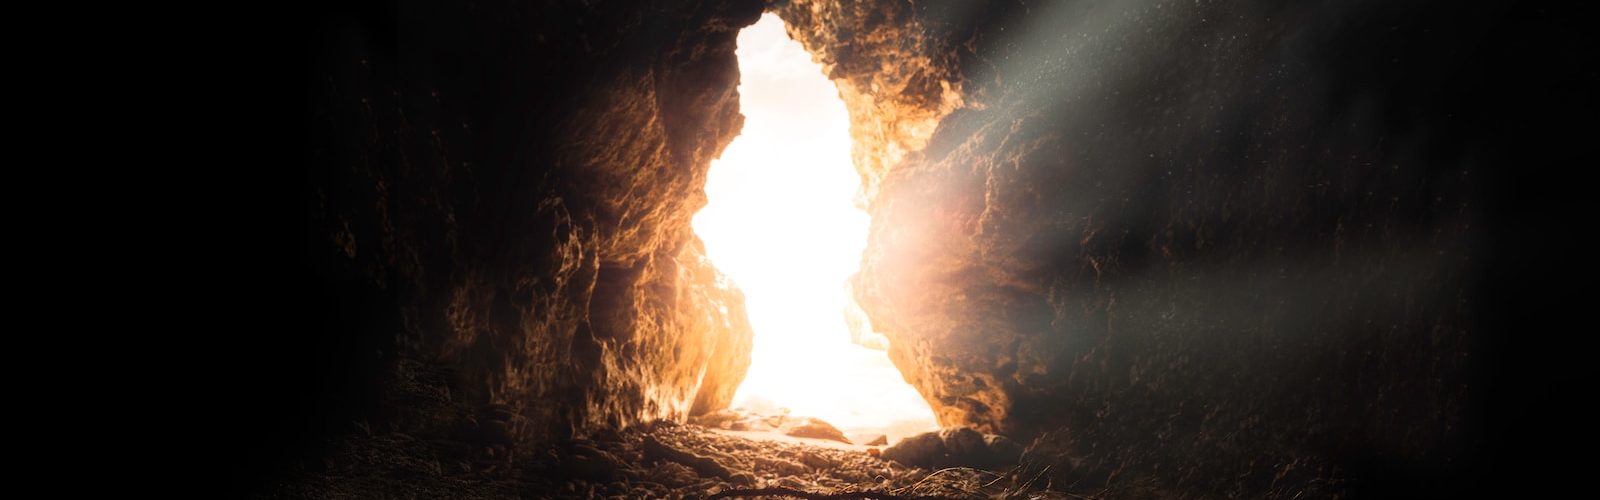 sun rays inside cave